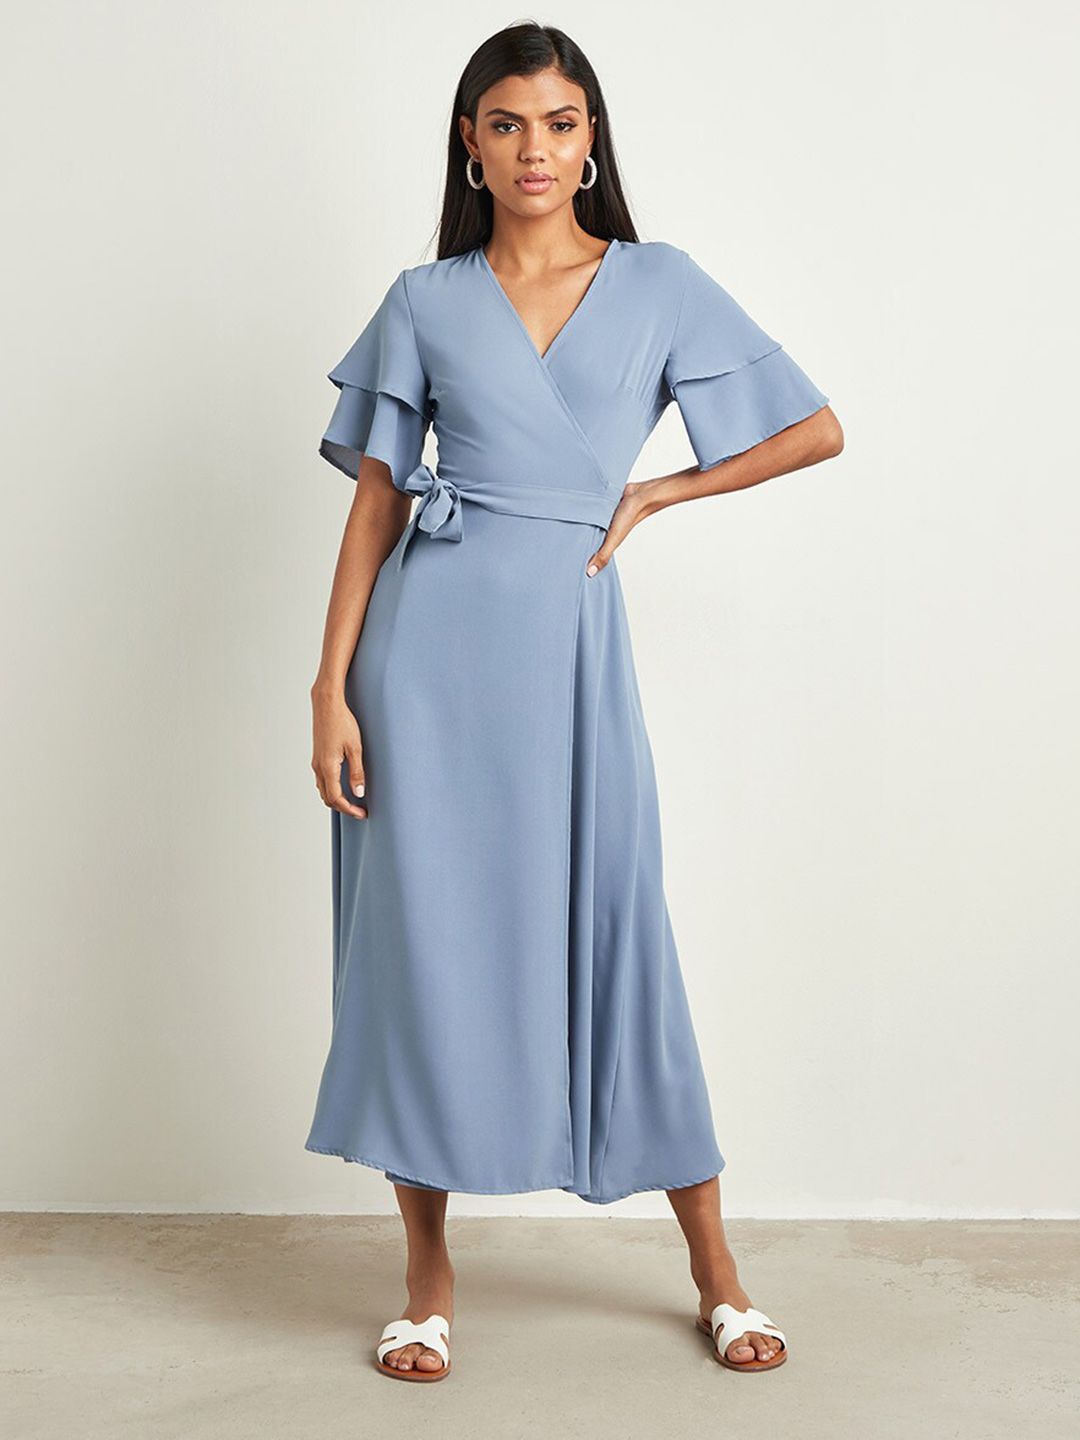 Styli Blue Maxi Dress Price in India